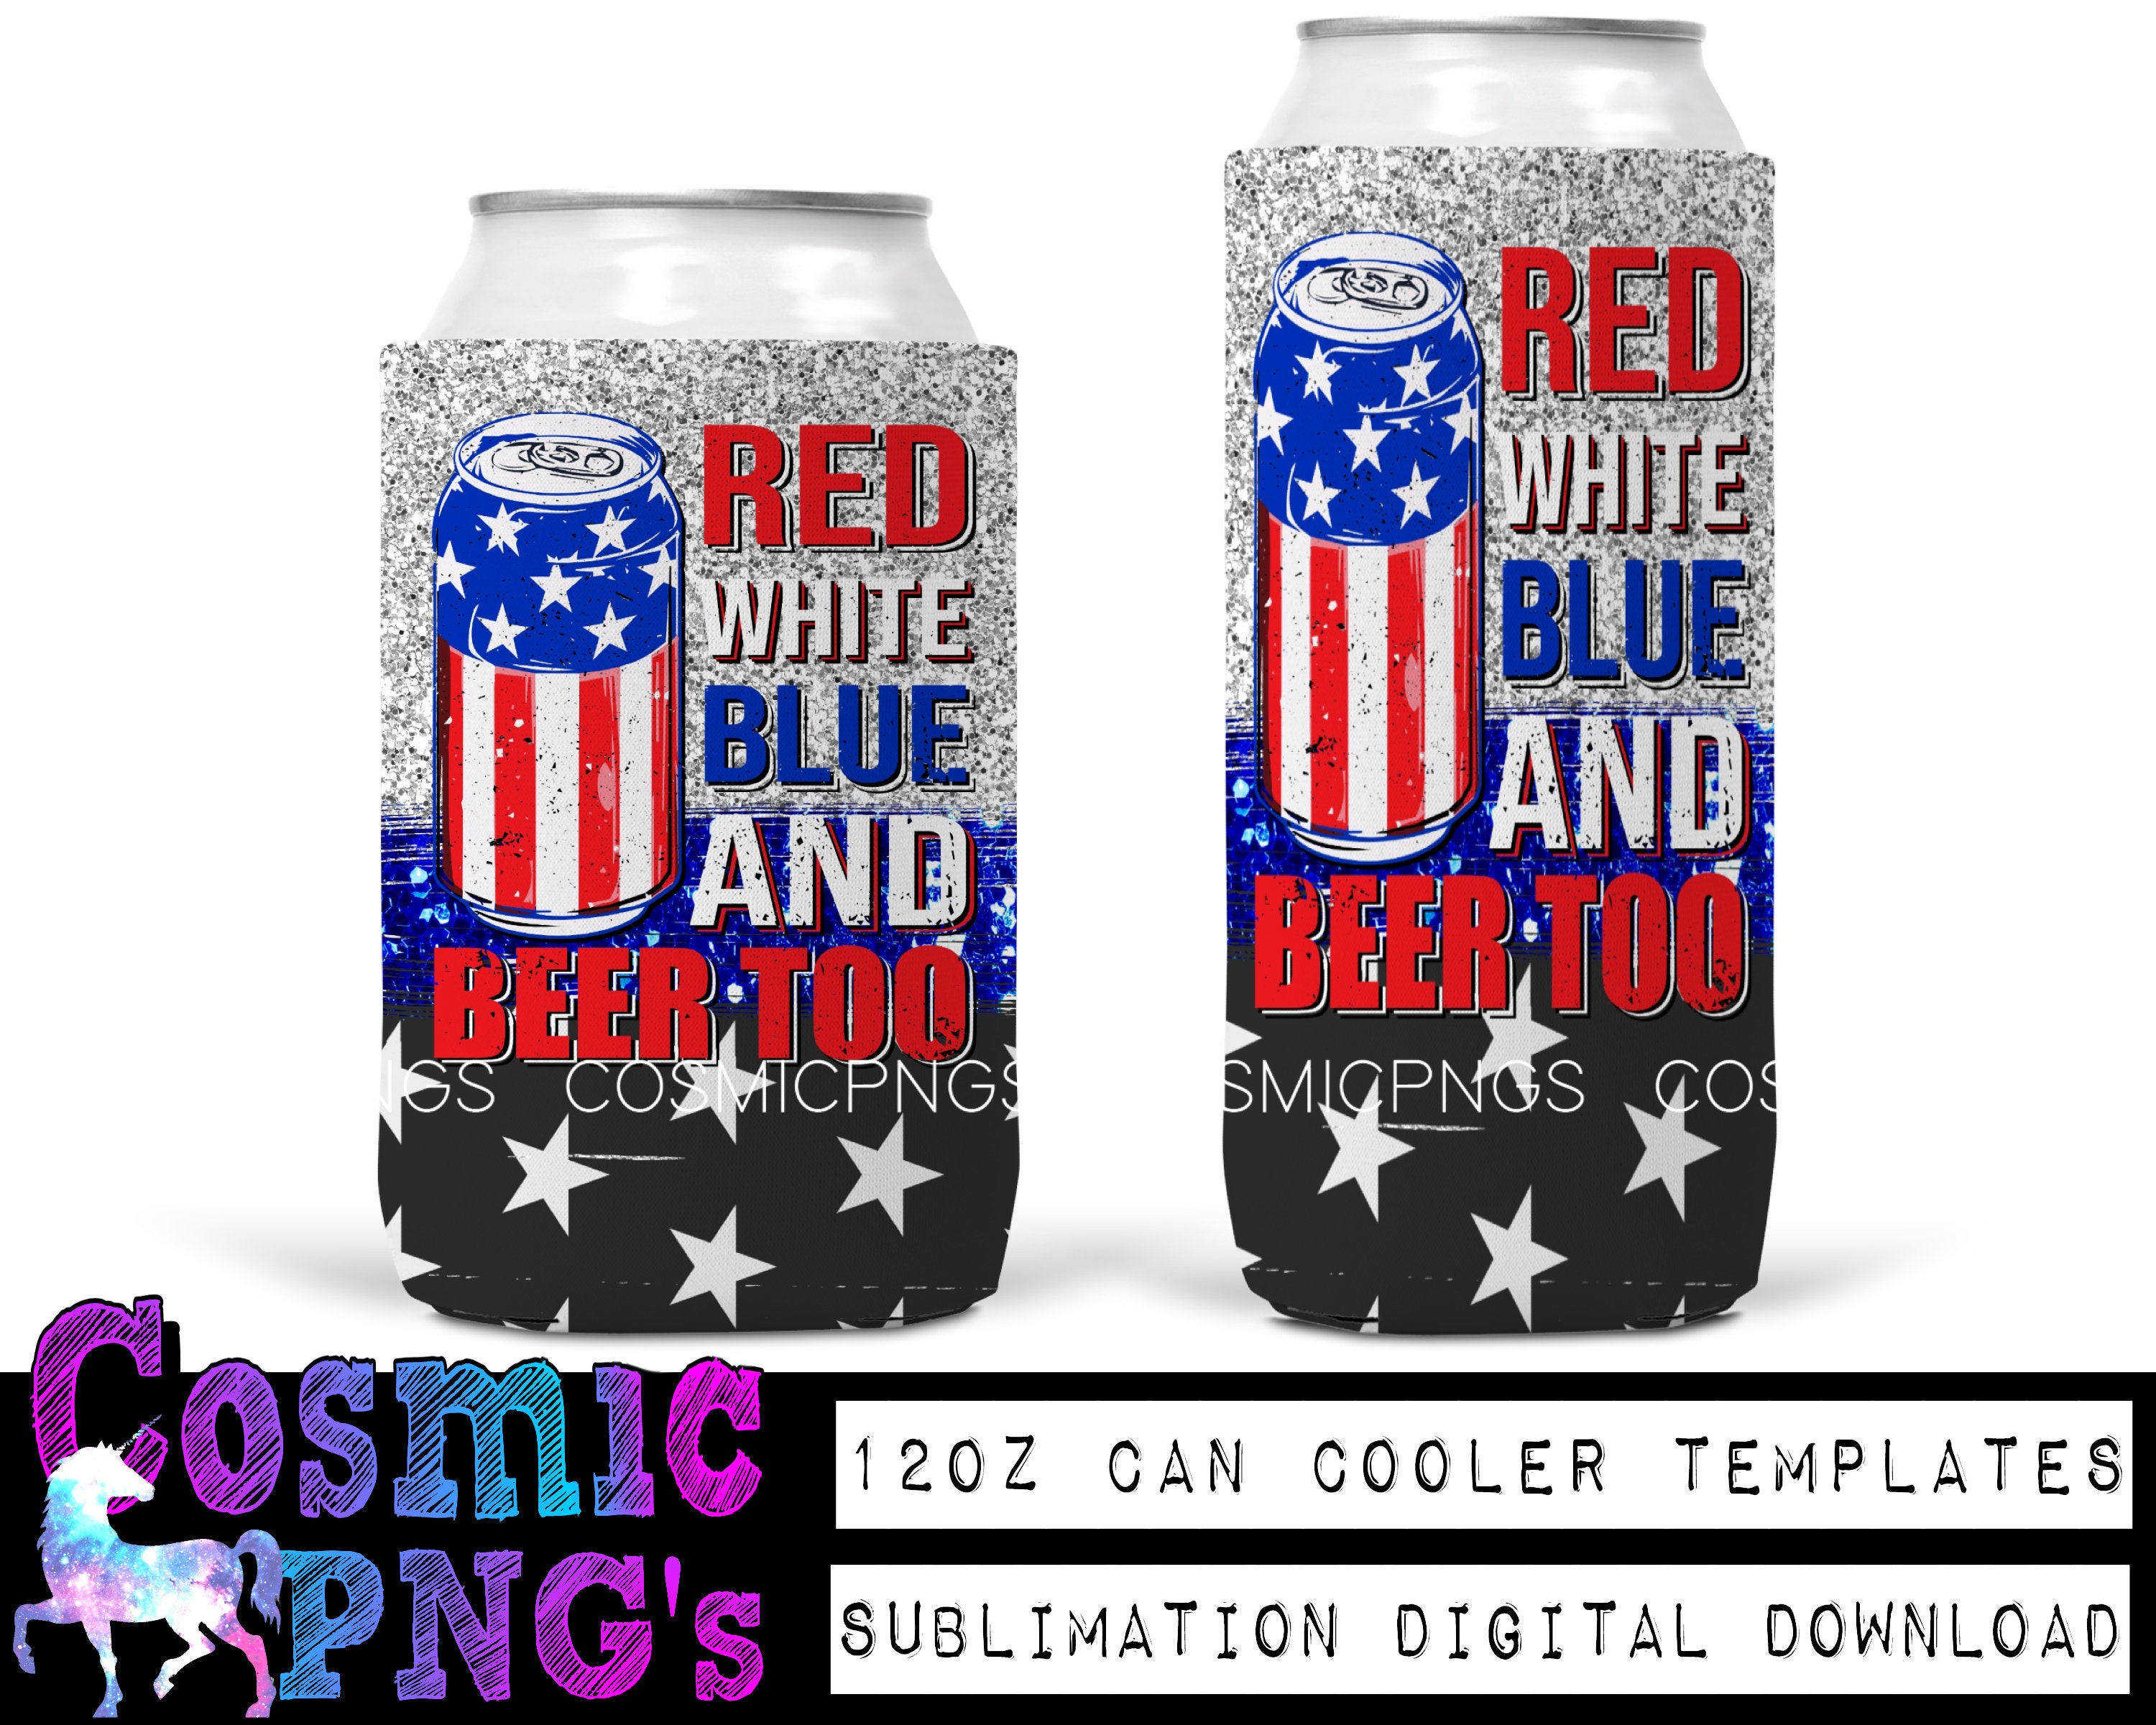 Koozie® Red White & Booze Patriotic Drink Cooler 